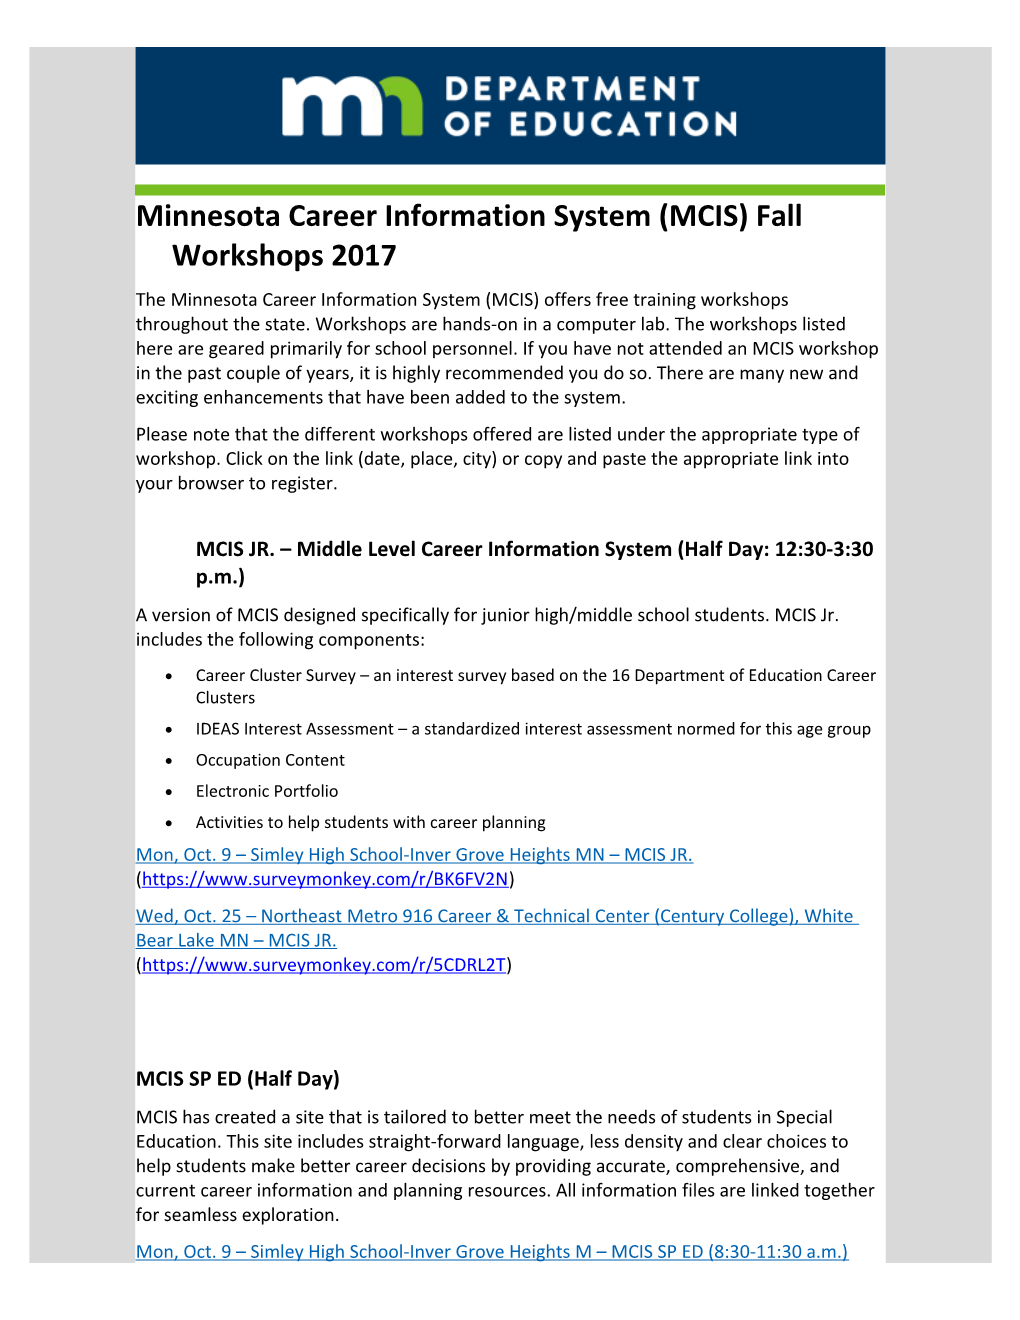 Minnesota Career Information System (MCIS) Fall Workshops 2017 the Minnesota Career Information